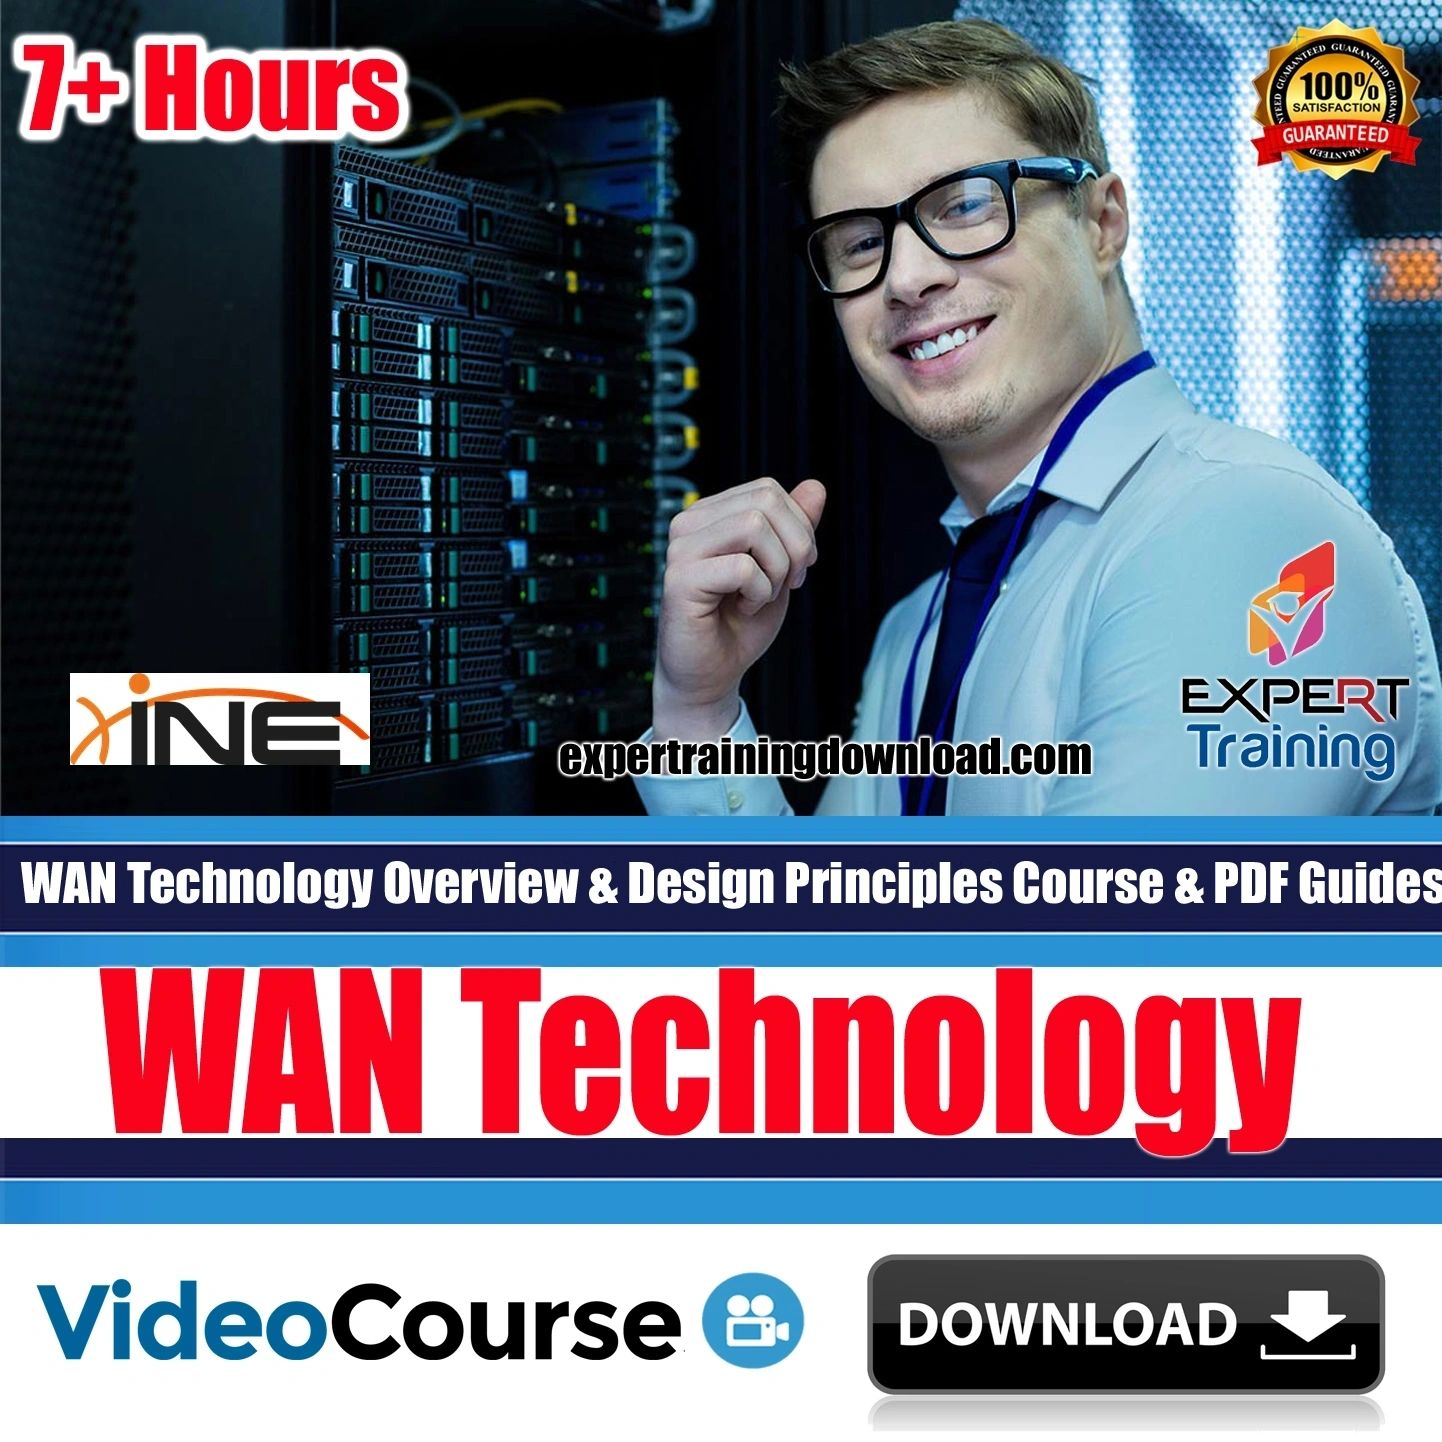 WAN Technology Overview & Design Principles Course & PDF Guides